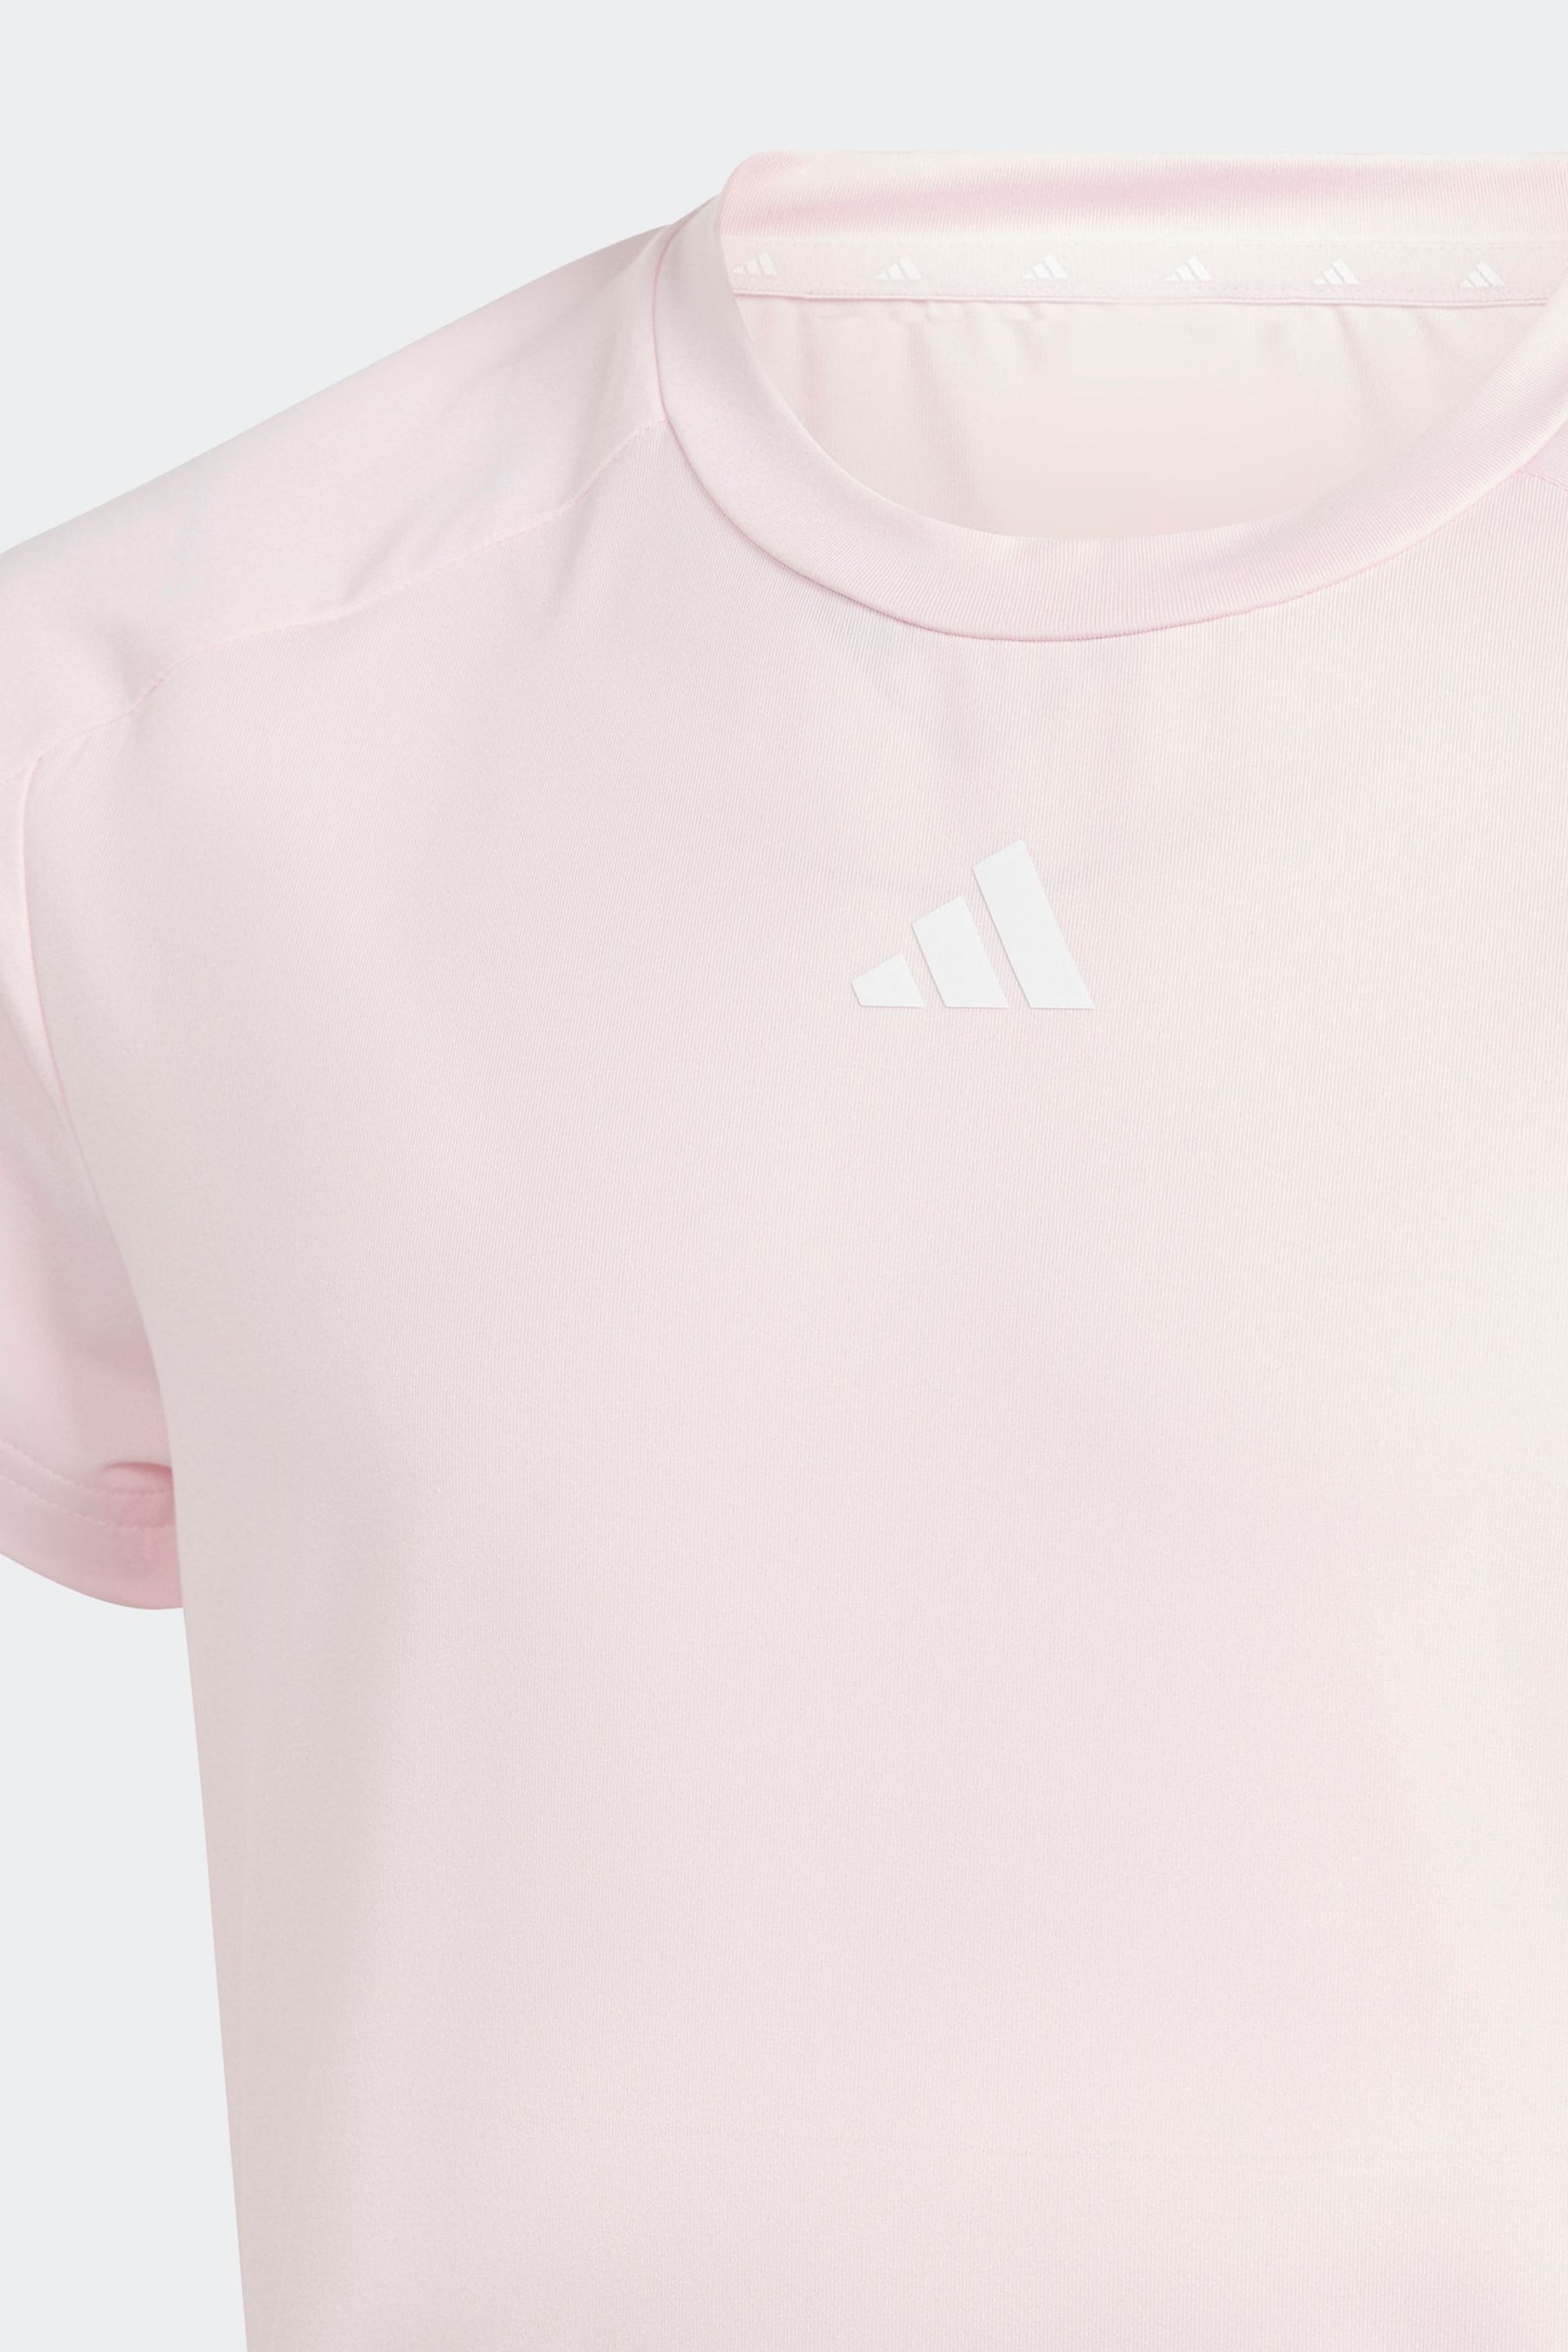 adidas Pink/Black Sportswear Train Essentials Kids T-Shirt And Shorts Set - Image 4 of 6